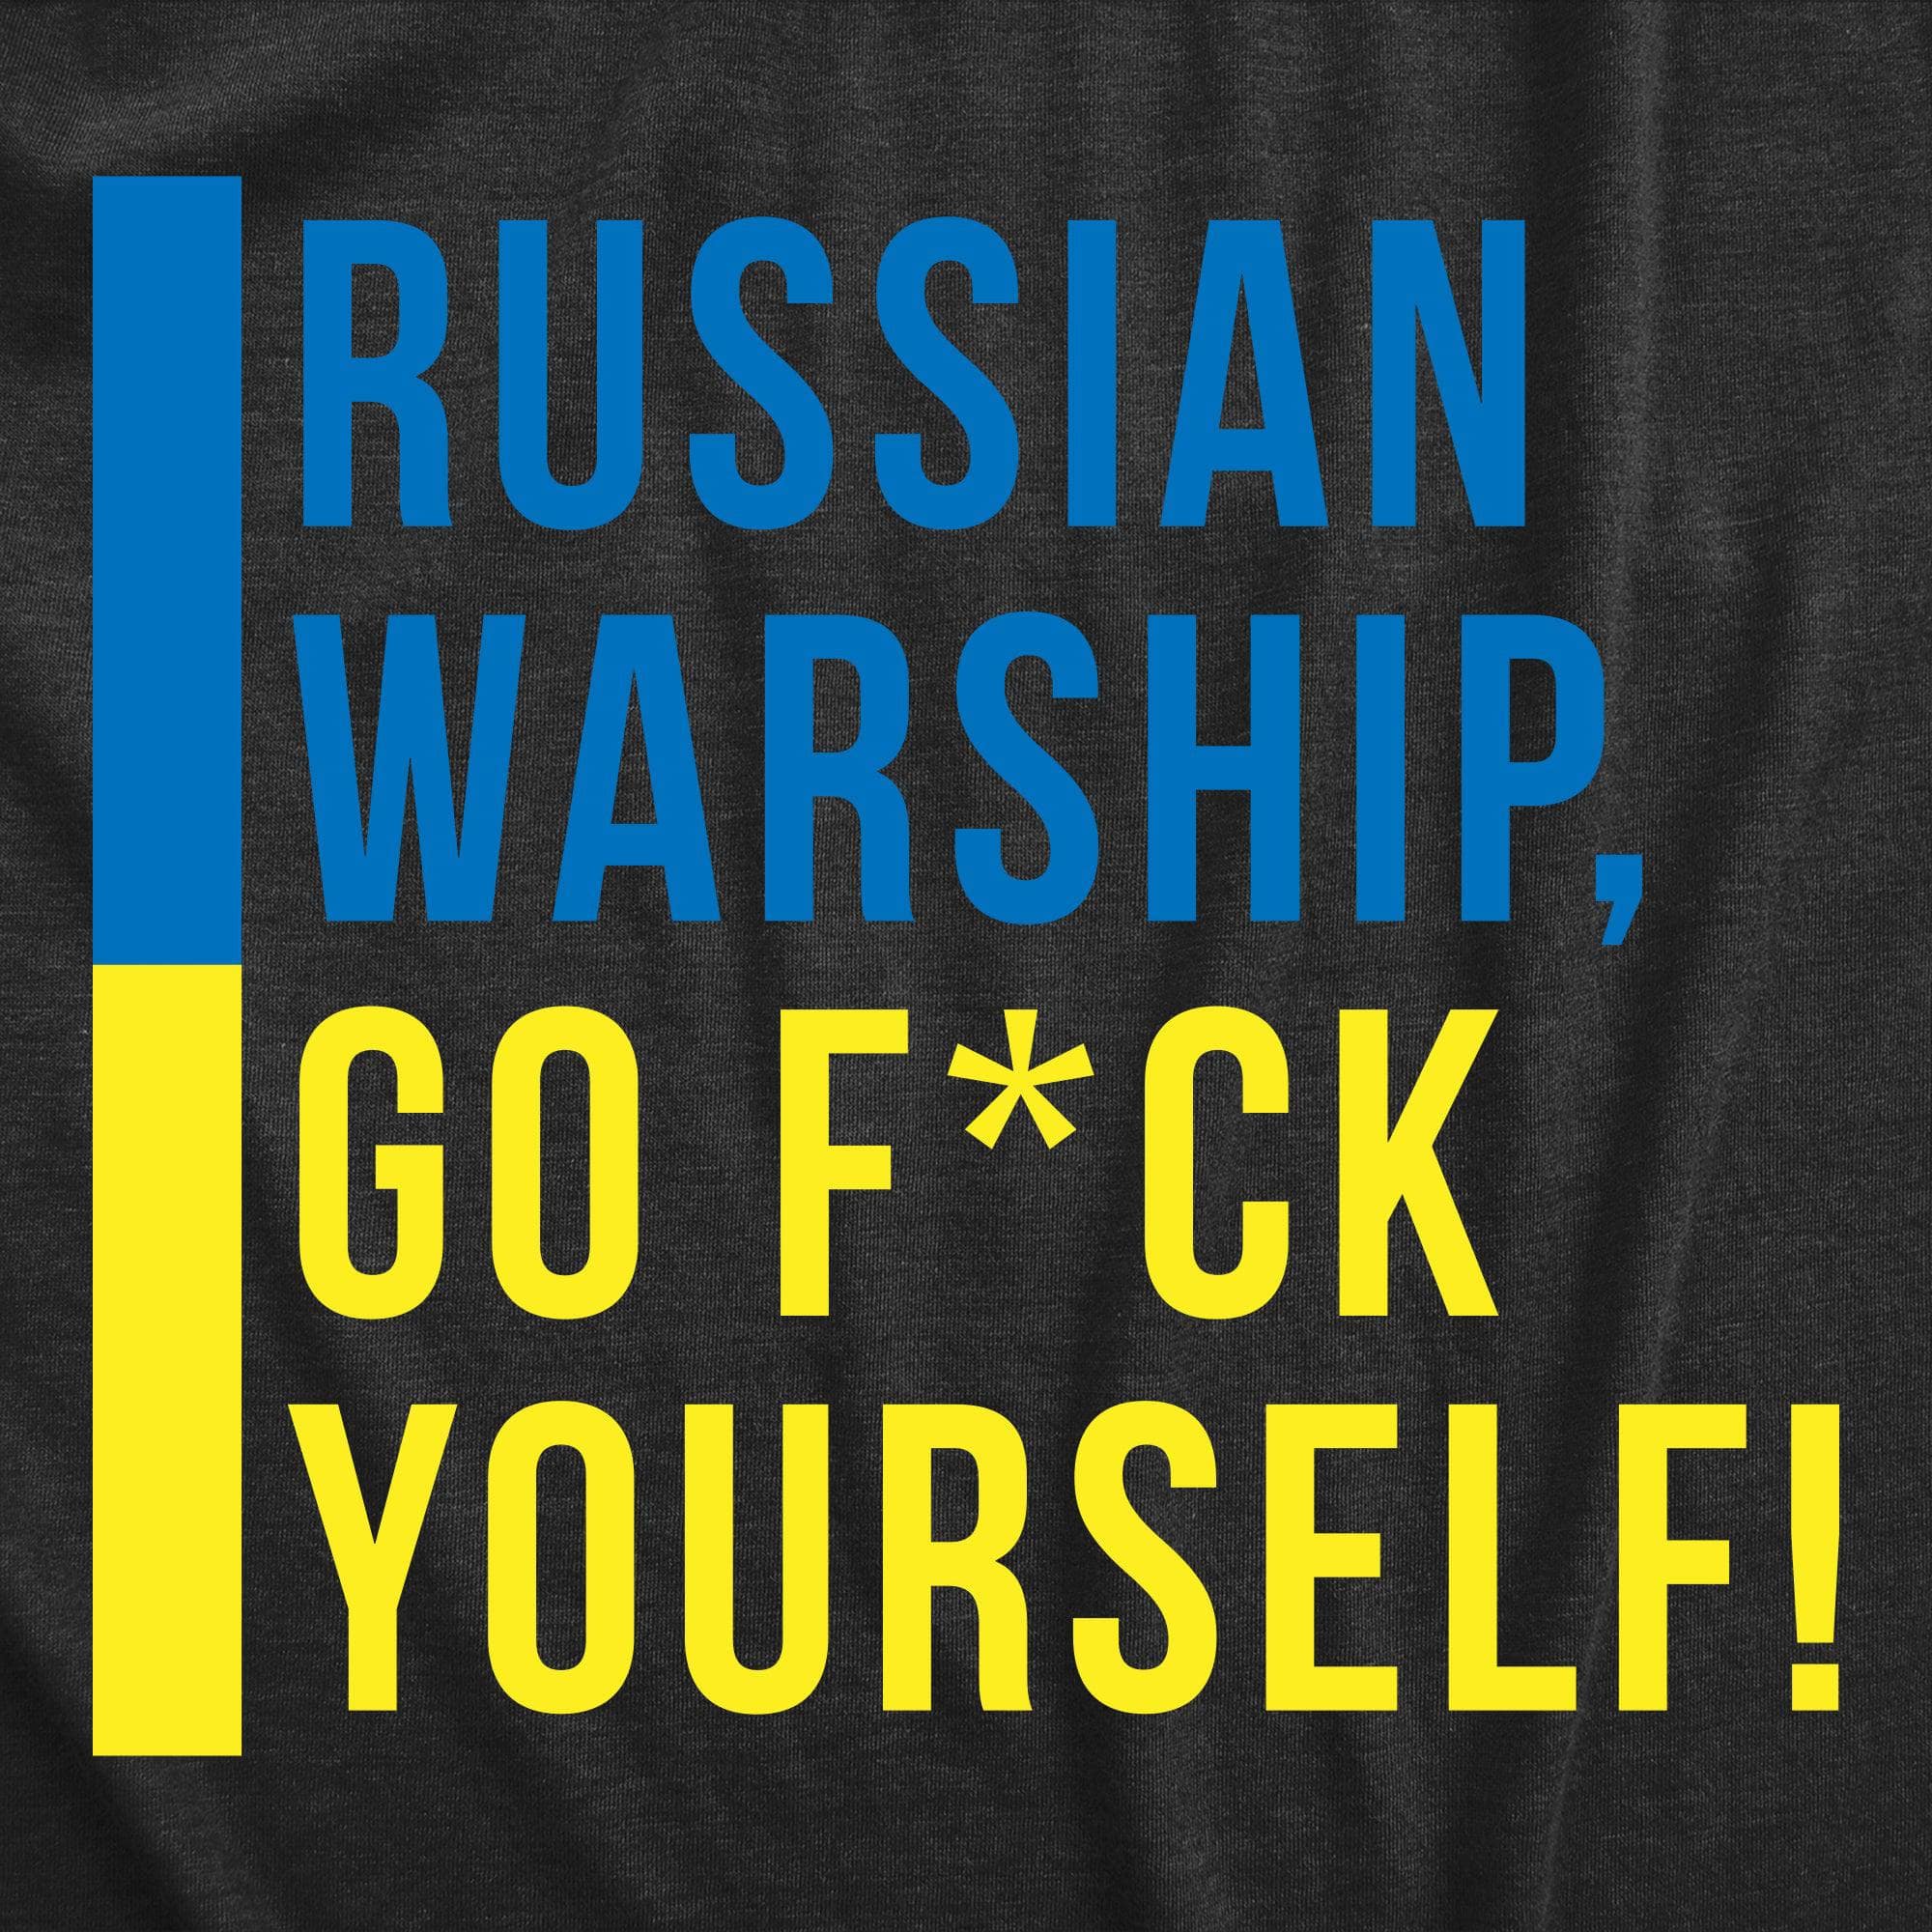 Russian Warship, Go Fuck Yourself Men's Tshirt  -  Crazy Dog T-Shirts